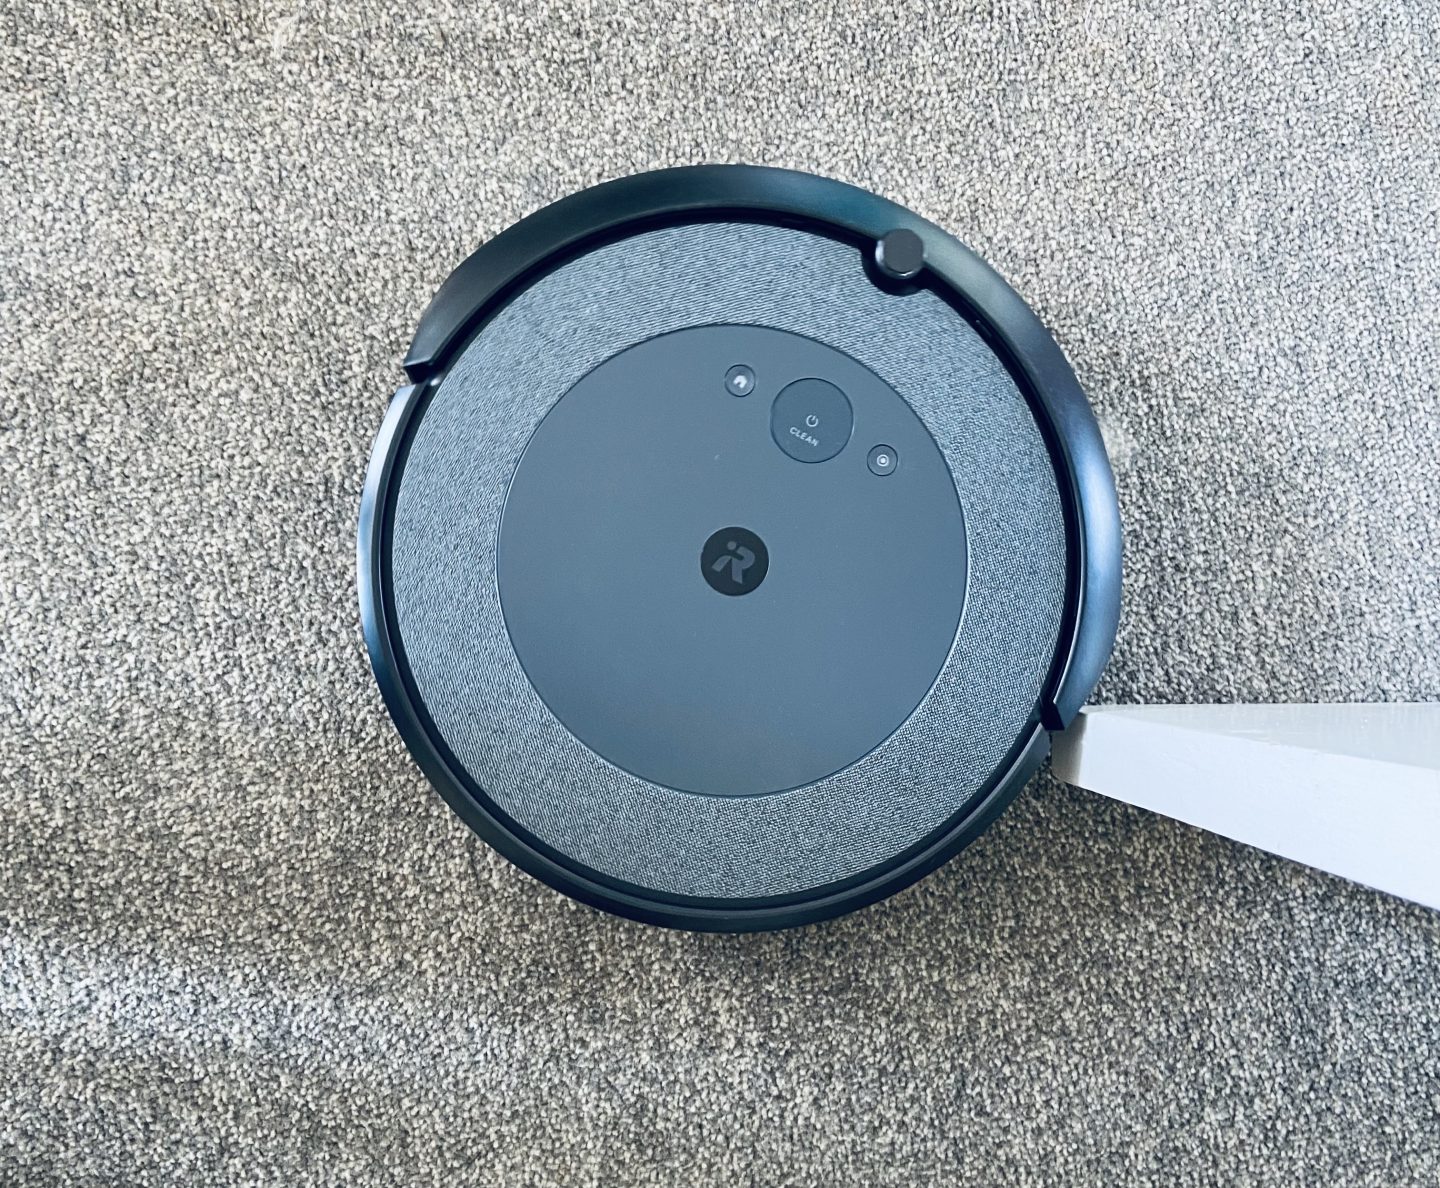 iRobot Roomba i3+ robot vacuum review